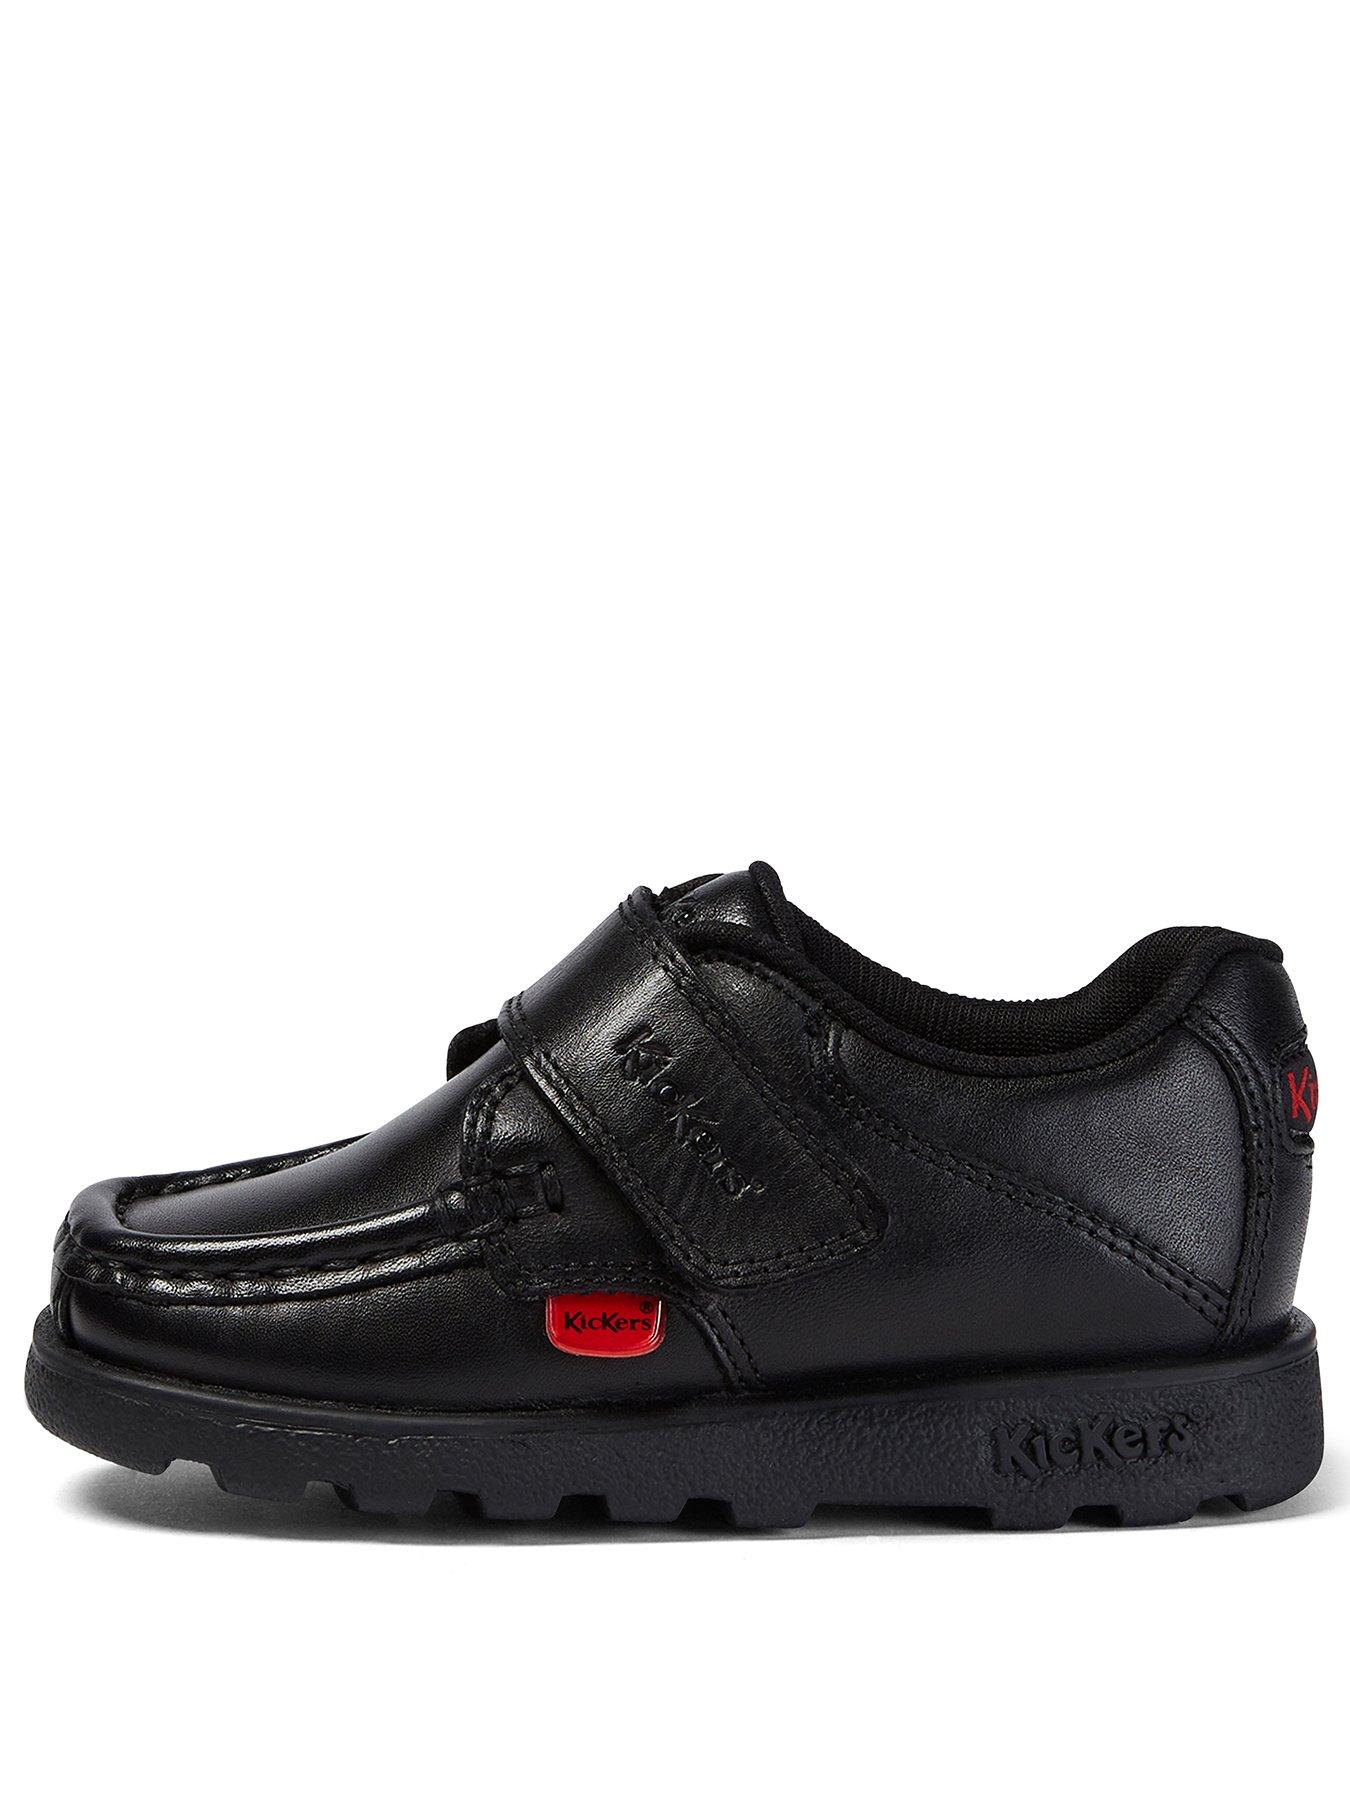 black shoes for kids boys